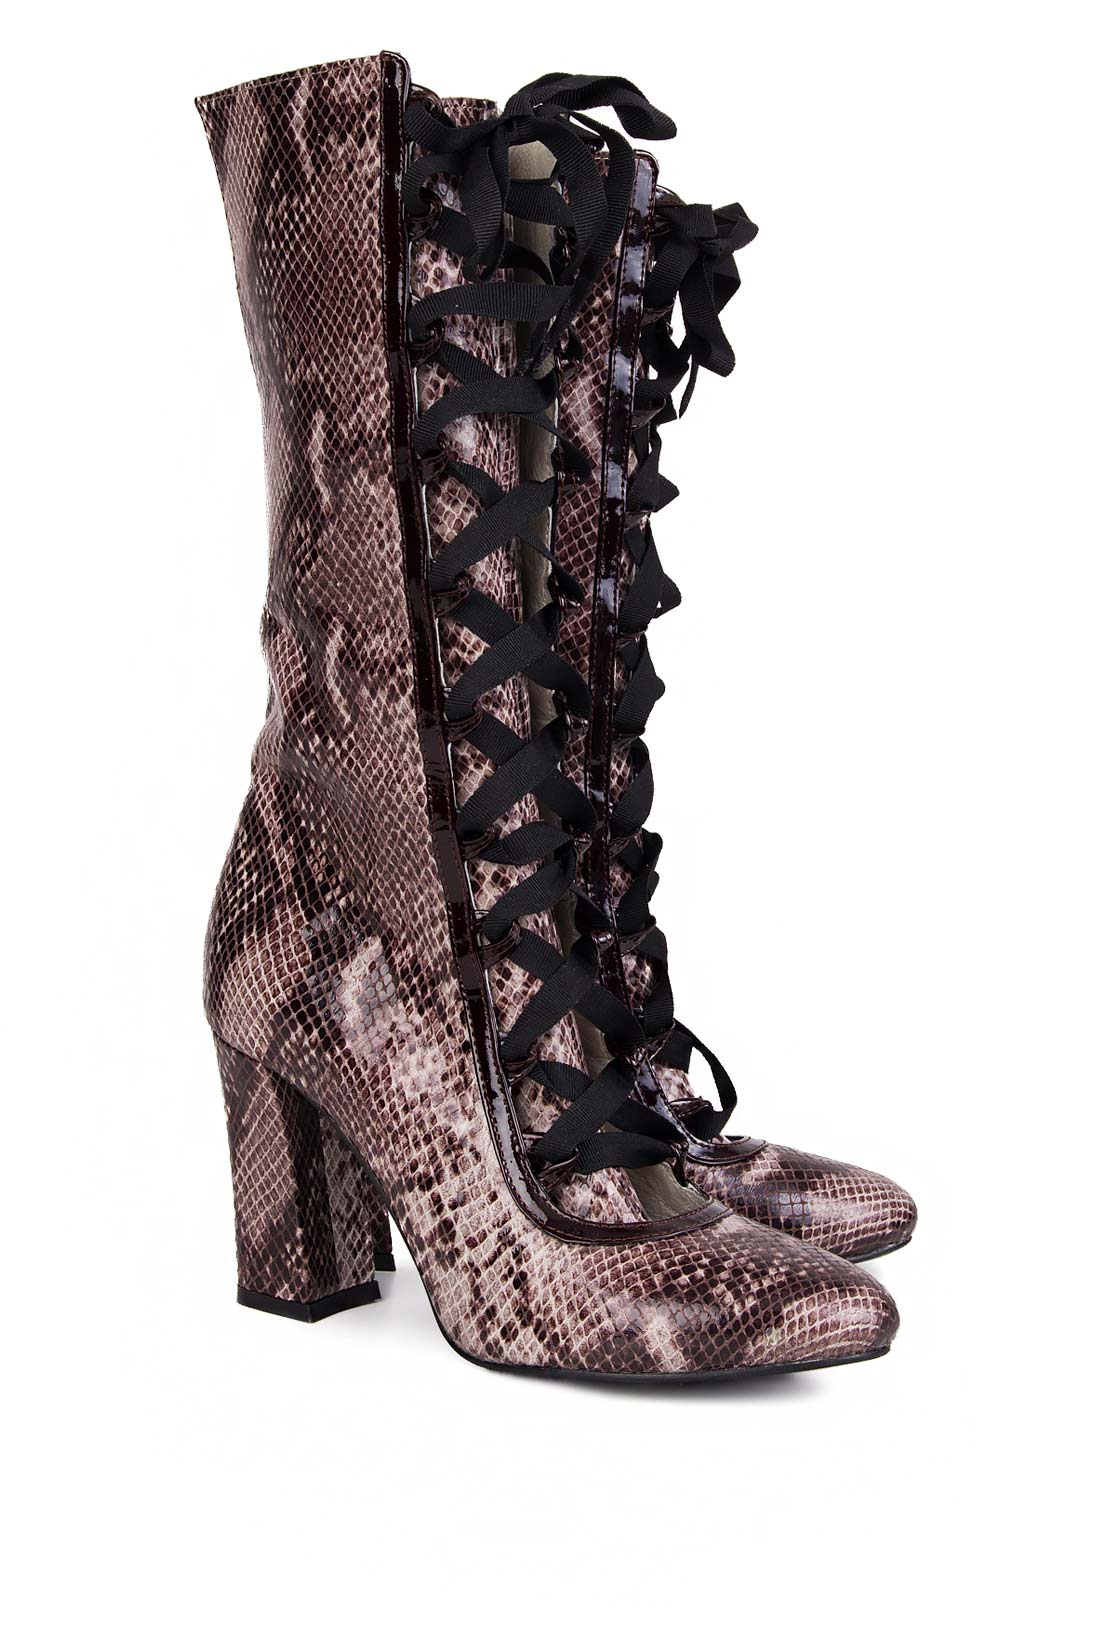 Lace-up python-type leather boots Ana Kaloni image 1